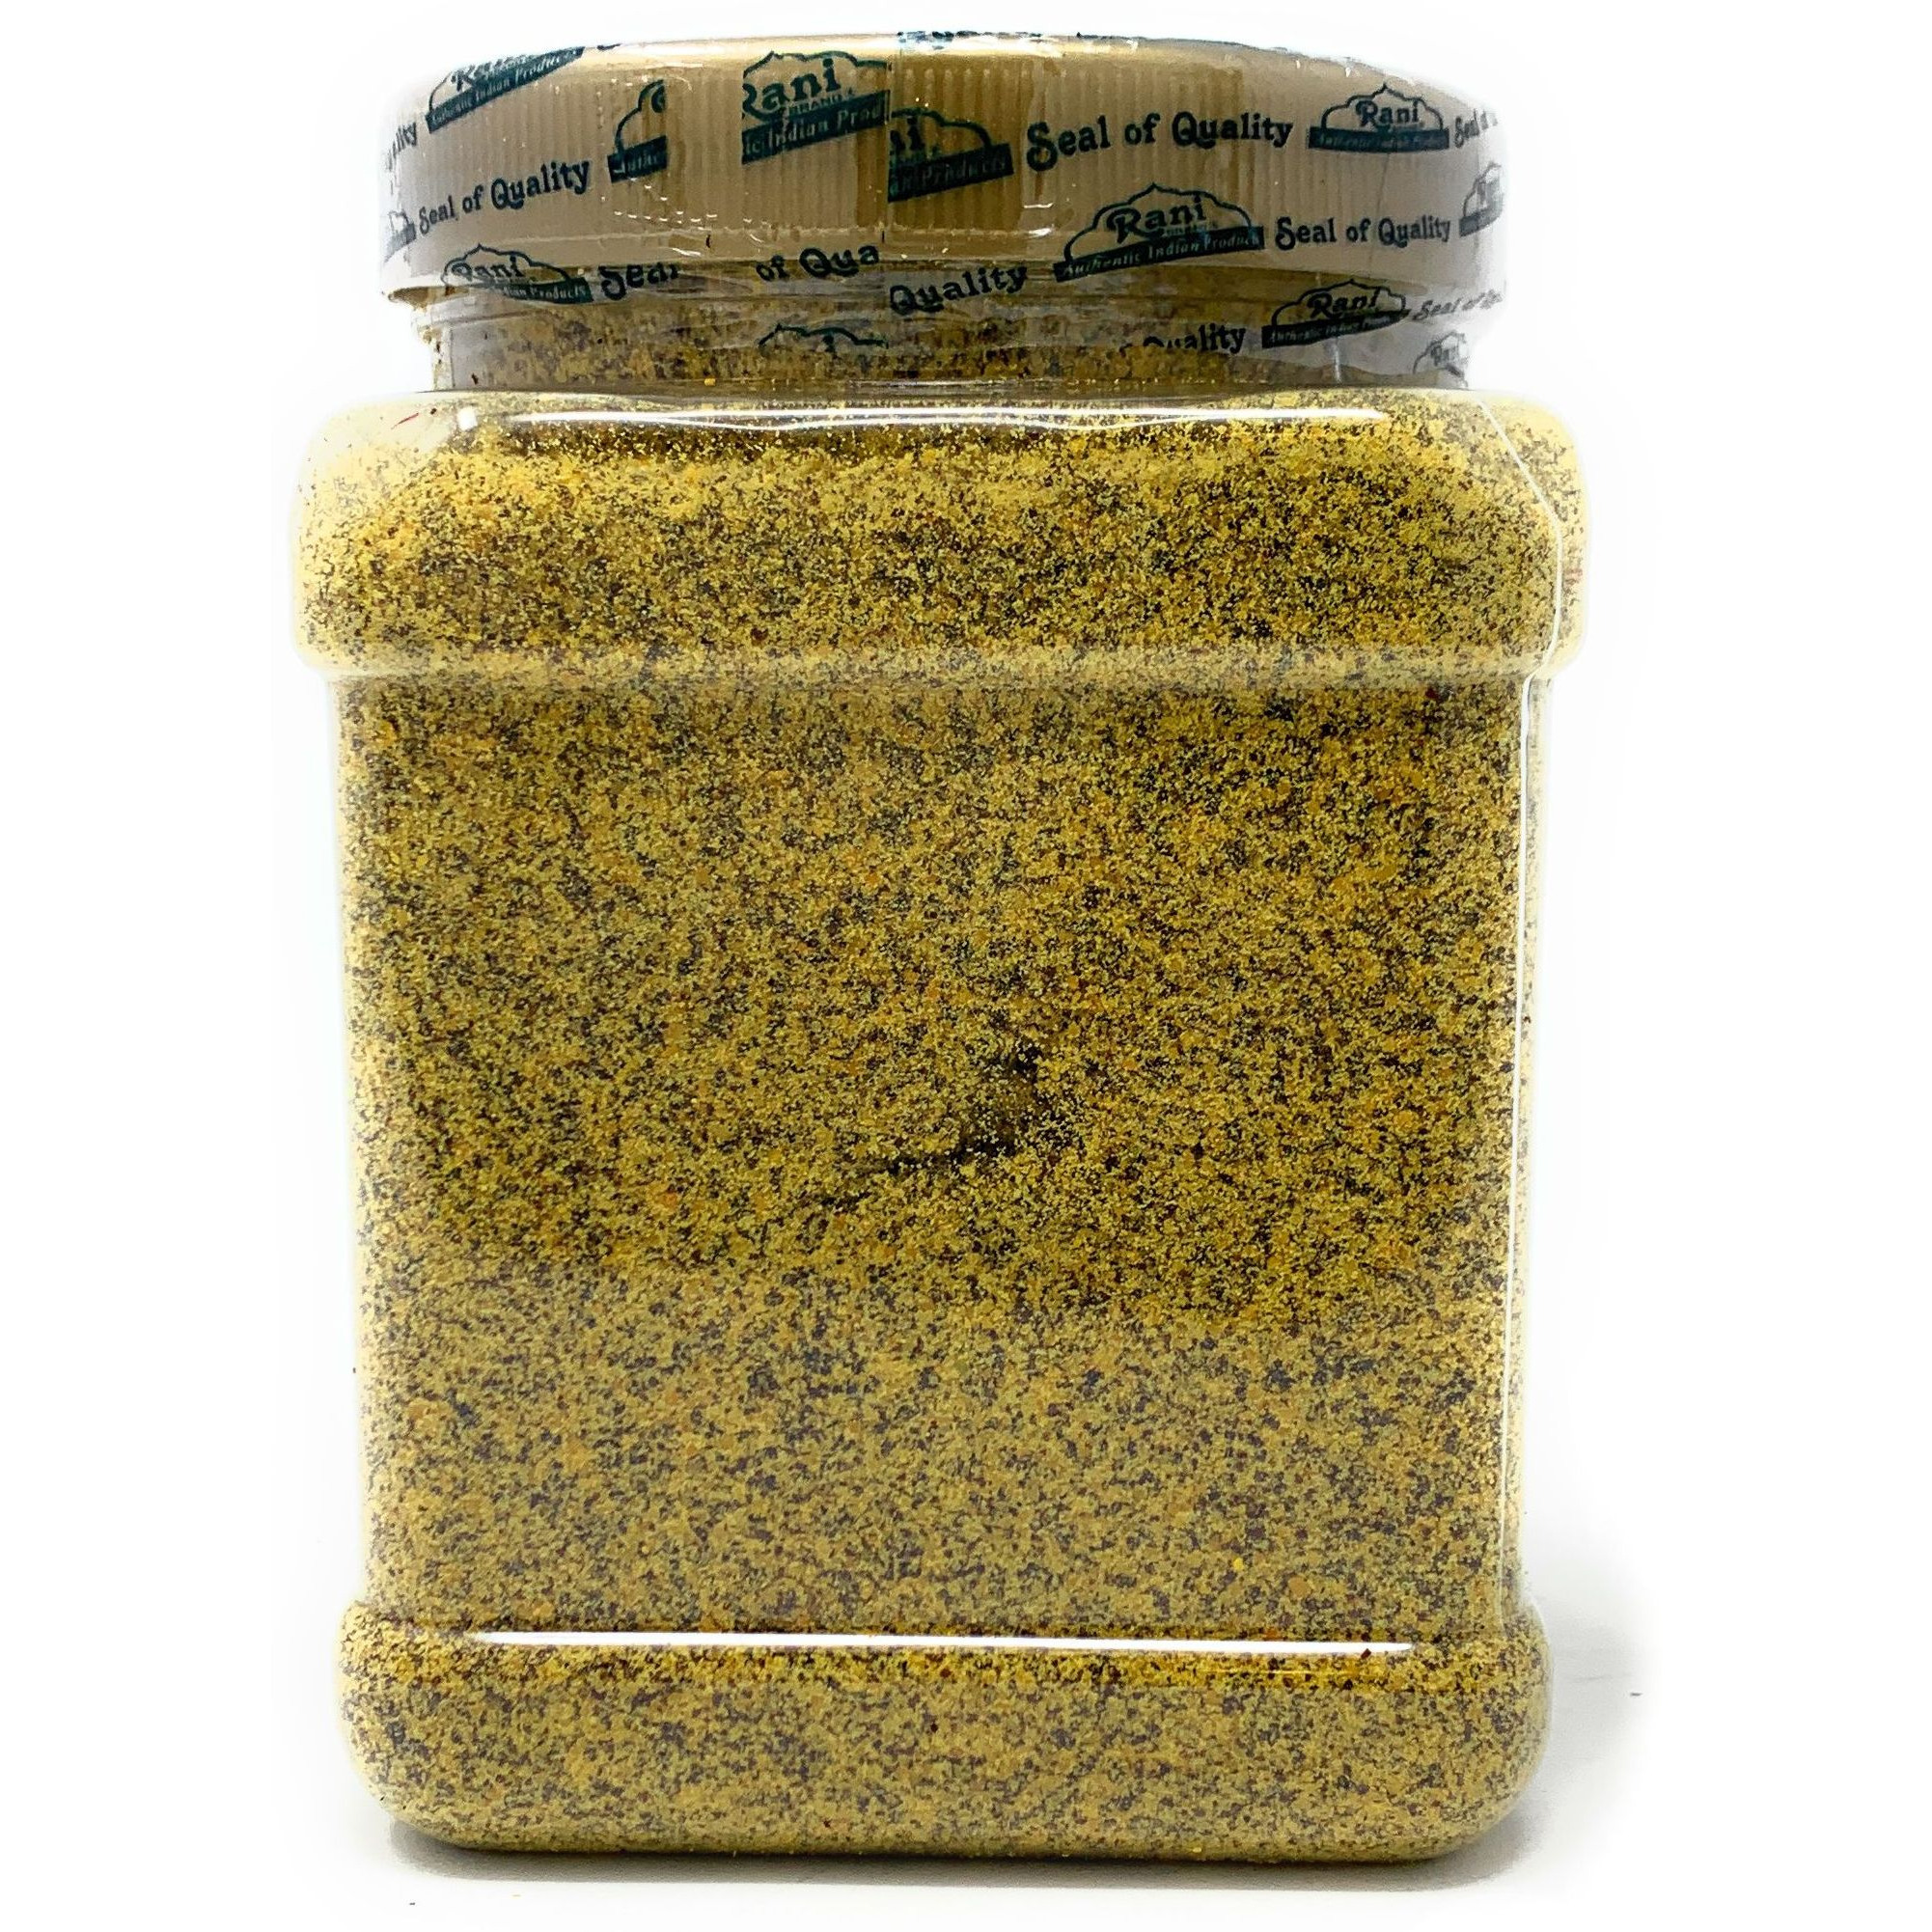 Rani Mustard Seeds Ground, Powder Spice (Rai Sarson) 16oz (454g) 1 Pound, 1lb ~ All Natural | Gluten Free Ingredients | NON-GMO | Vegan | Indian Origin